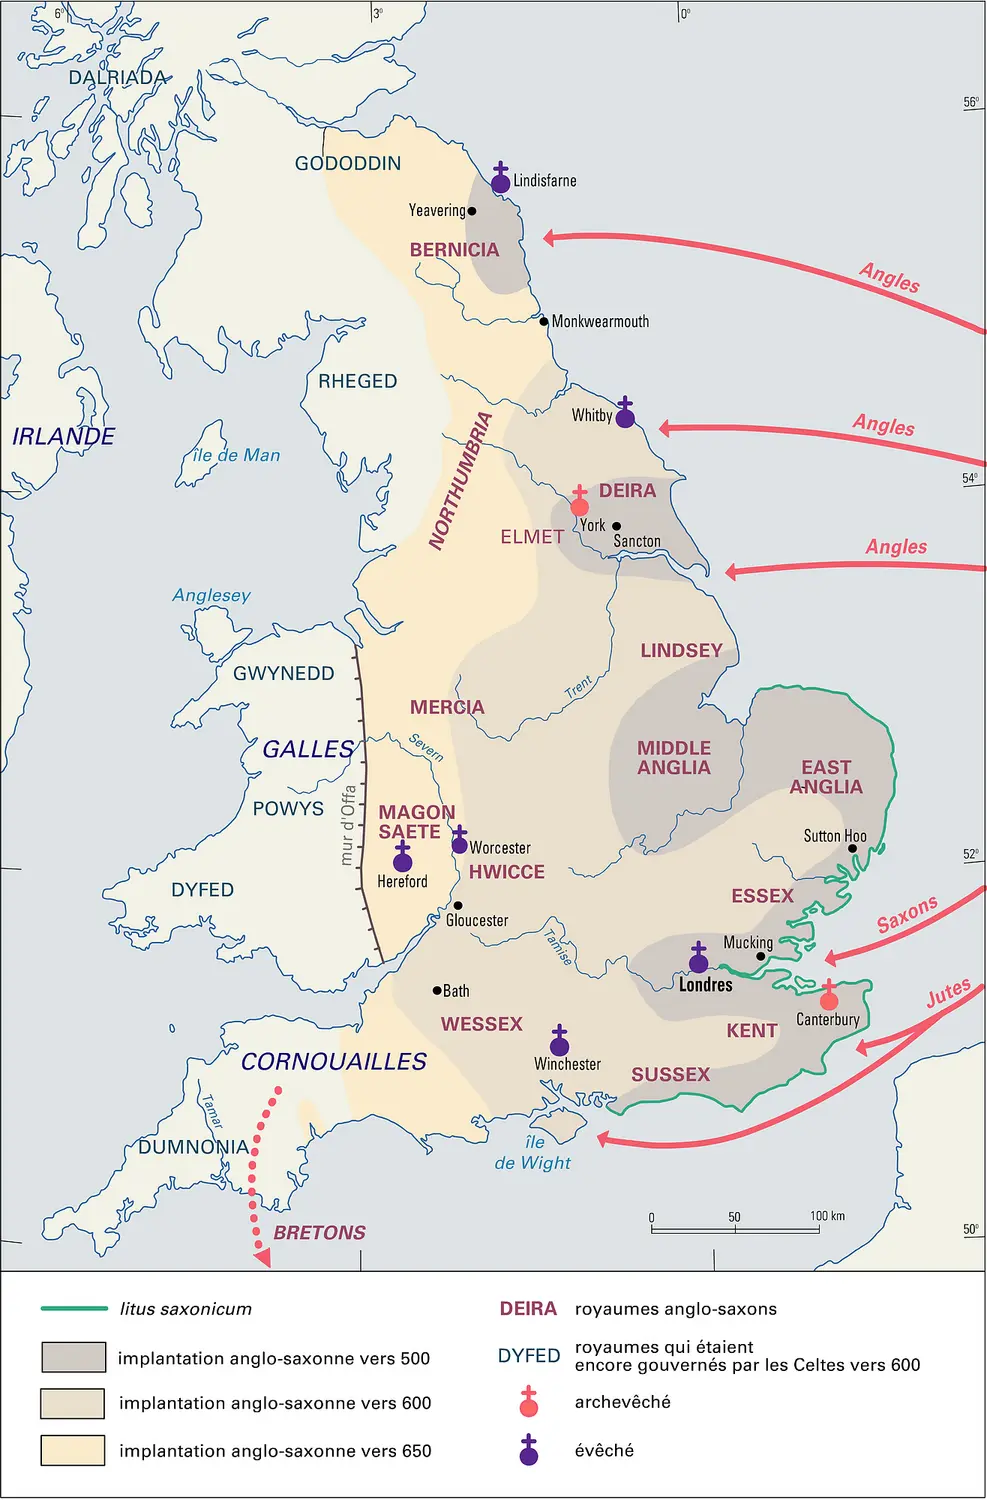 Grande-Bretagne, Angleterre anglo-saxonne, Ve-VIIe siècles